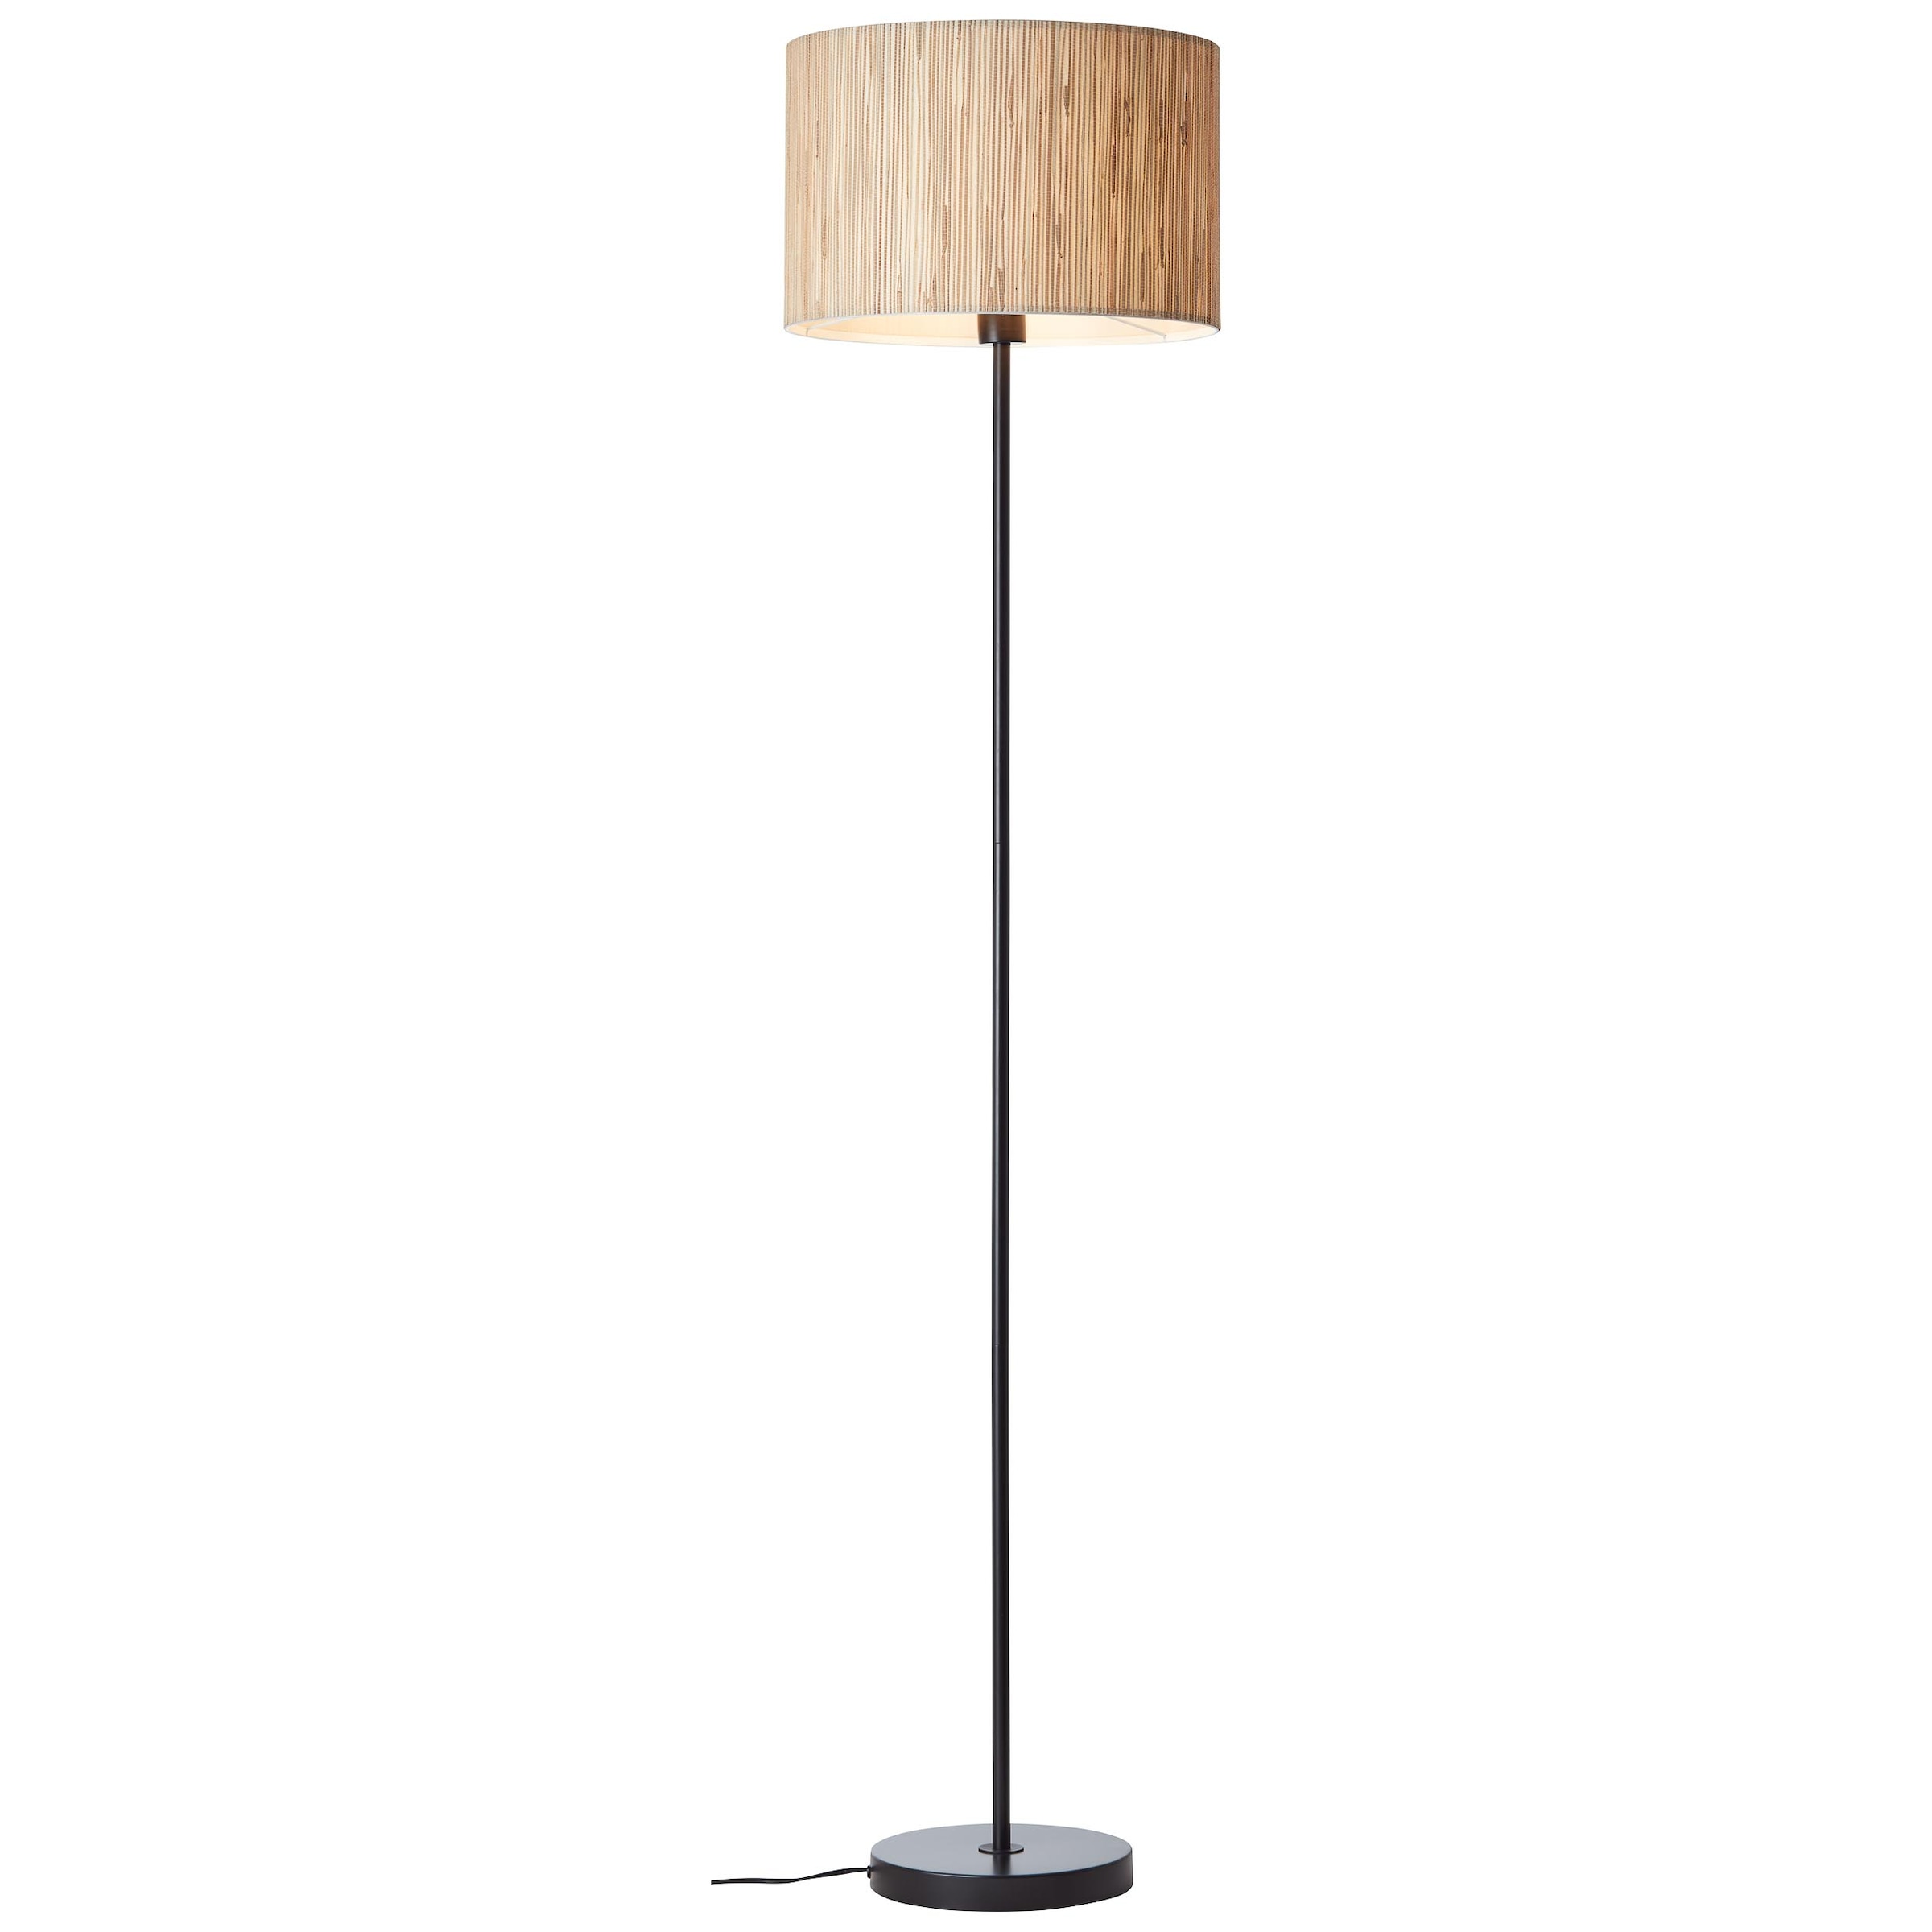 Brilliant Stehlampe »Wimea«, 1 flammig-flammig, 161,5 cm Höhe, Ø 38 cm, 1 x  E27, Metall/Seegras, schwarz/natur | günstig kaufen